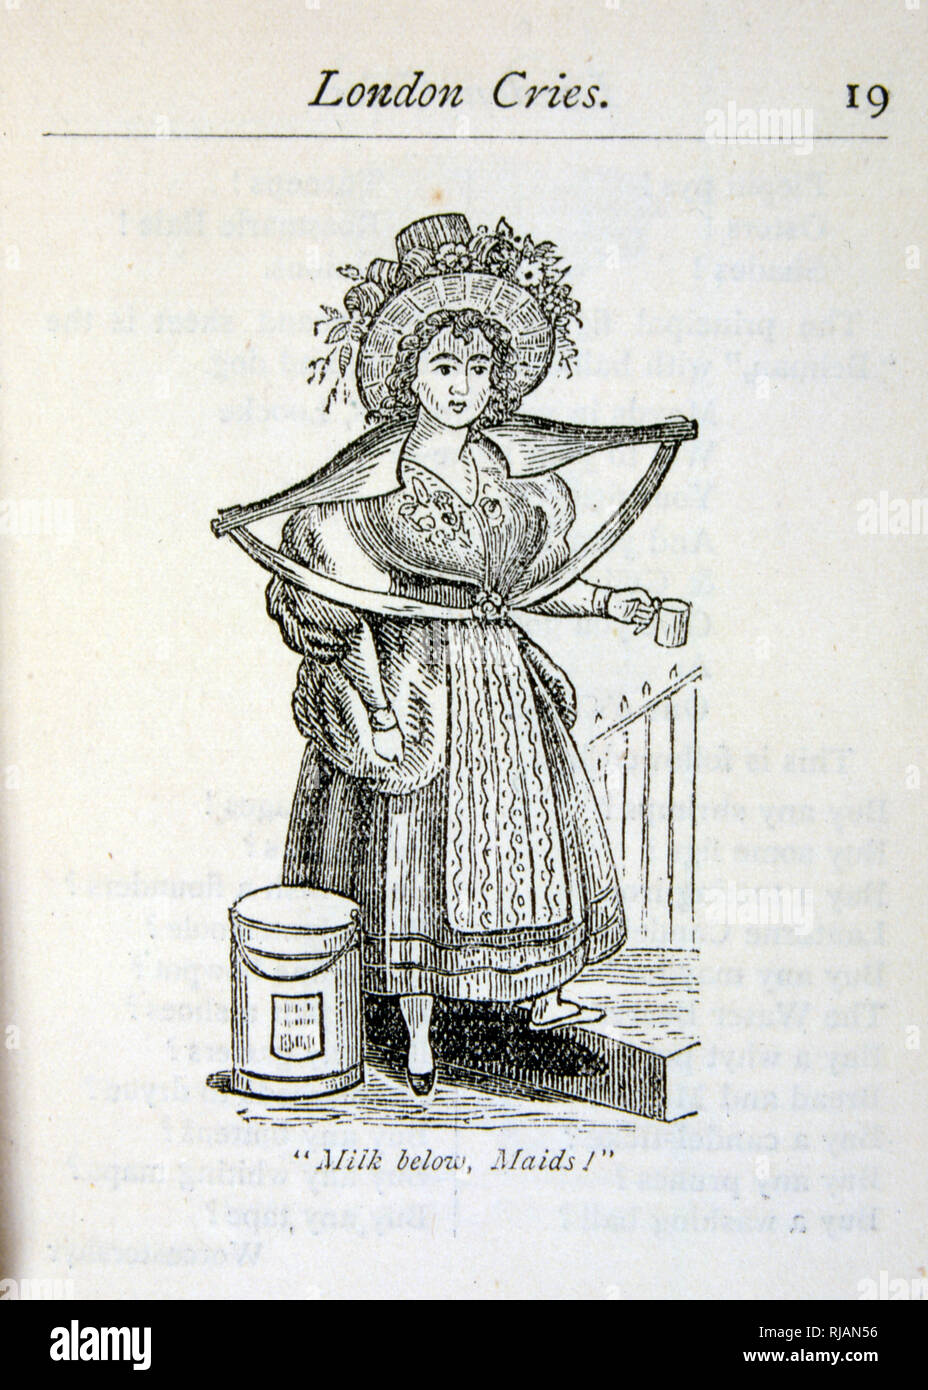 https://c8.alamy.com/comp/RJAN56/illustration-of-a-milk-maid-carrying-fresh-milk-on-the-streets-of-london-circa-1830-RJAN56.jpg